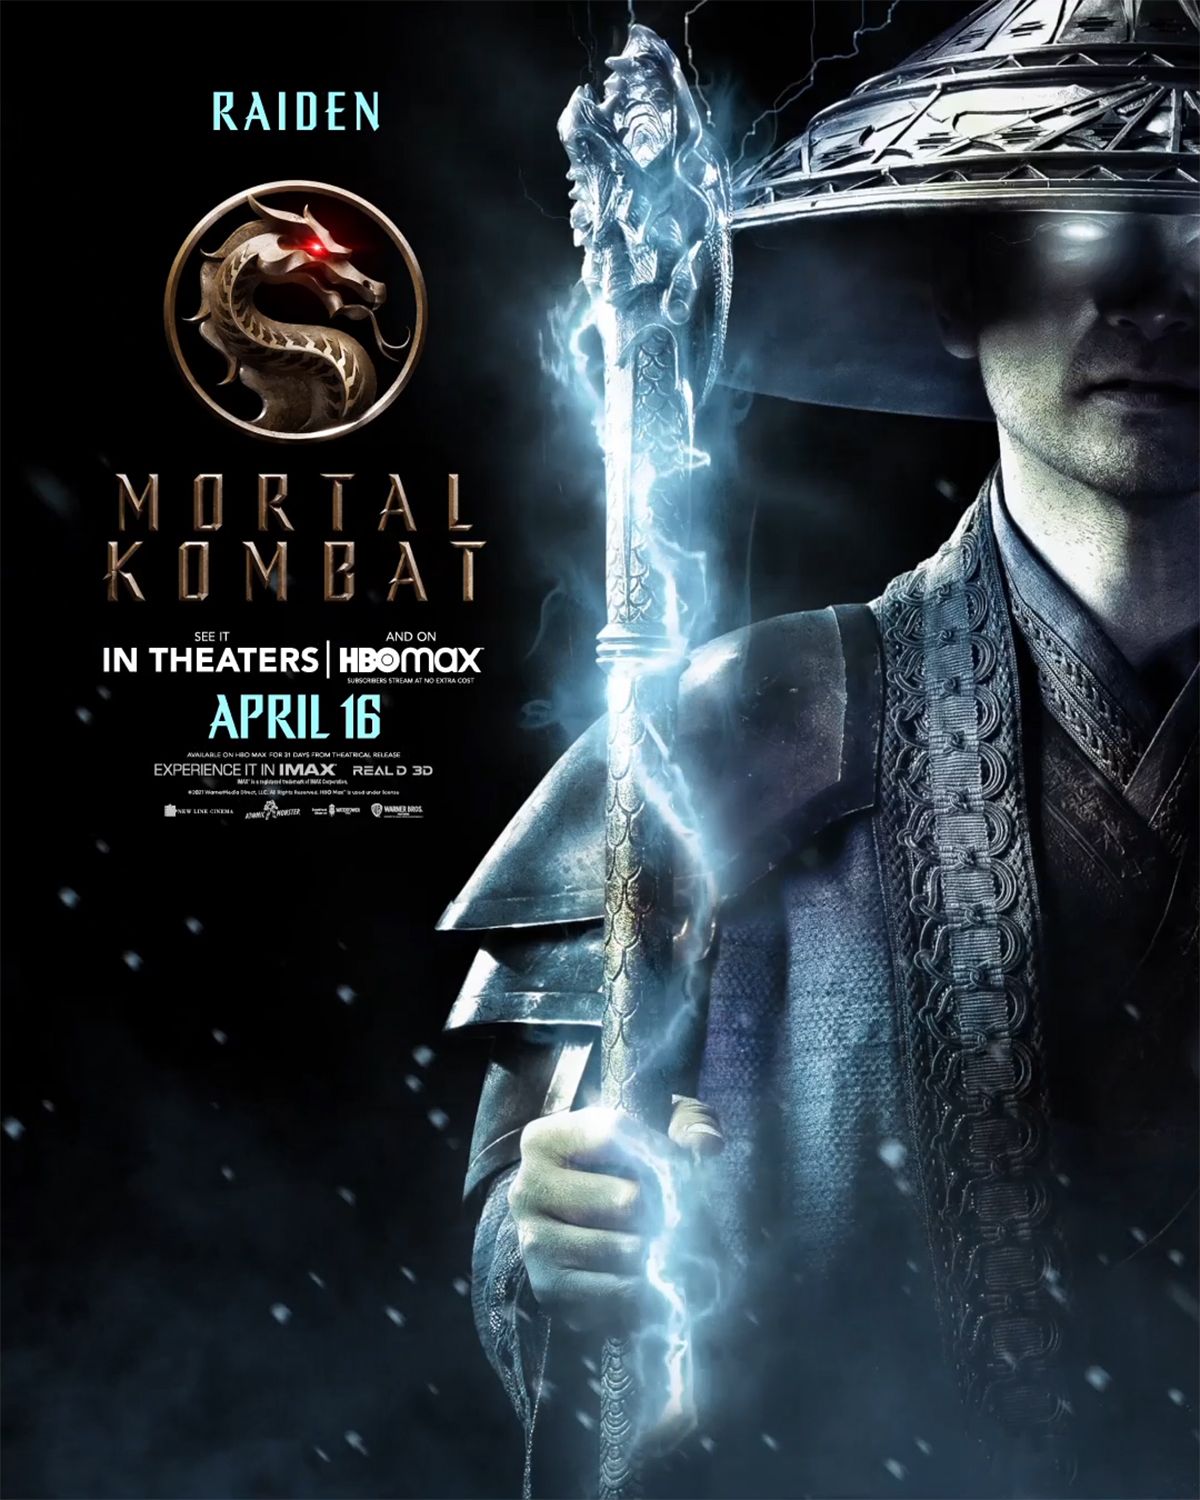 Mortal Kombat Movie Posters 2021 Jax, Dynasty On Twitter Mortalkombat Movie 2021 Filming Begins Soon Jax Briggs Choreography Teased Reboot Film T Co Nenzcaef04 T Co 9o5hwht1el / In